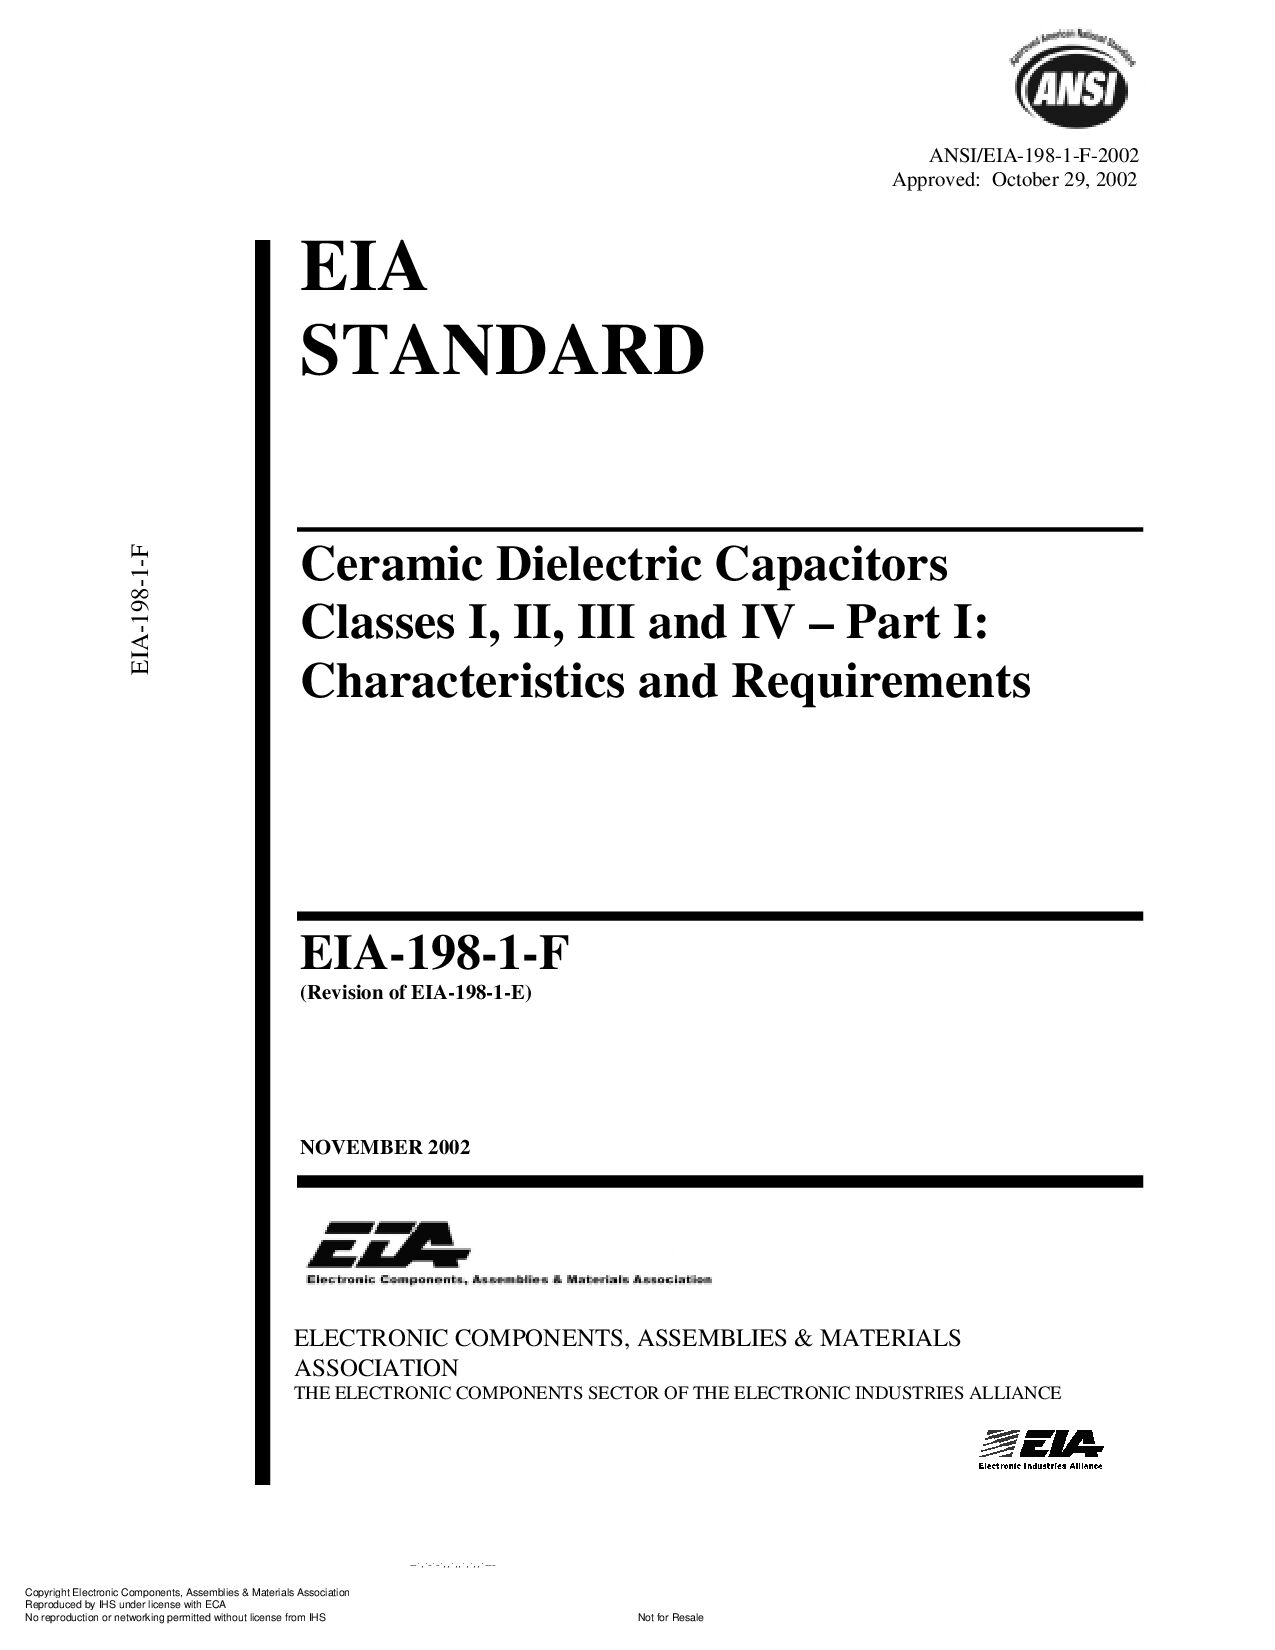 ANSI/EIA 198-1-F:2002封面图